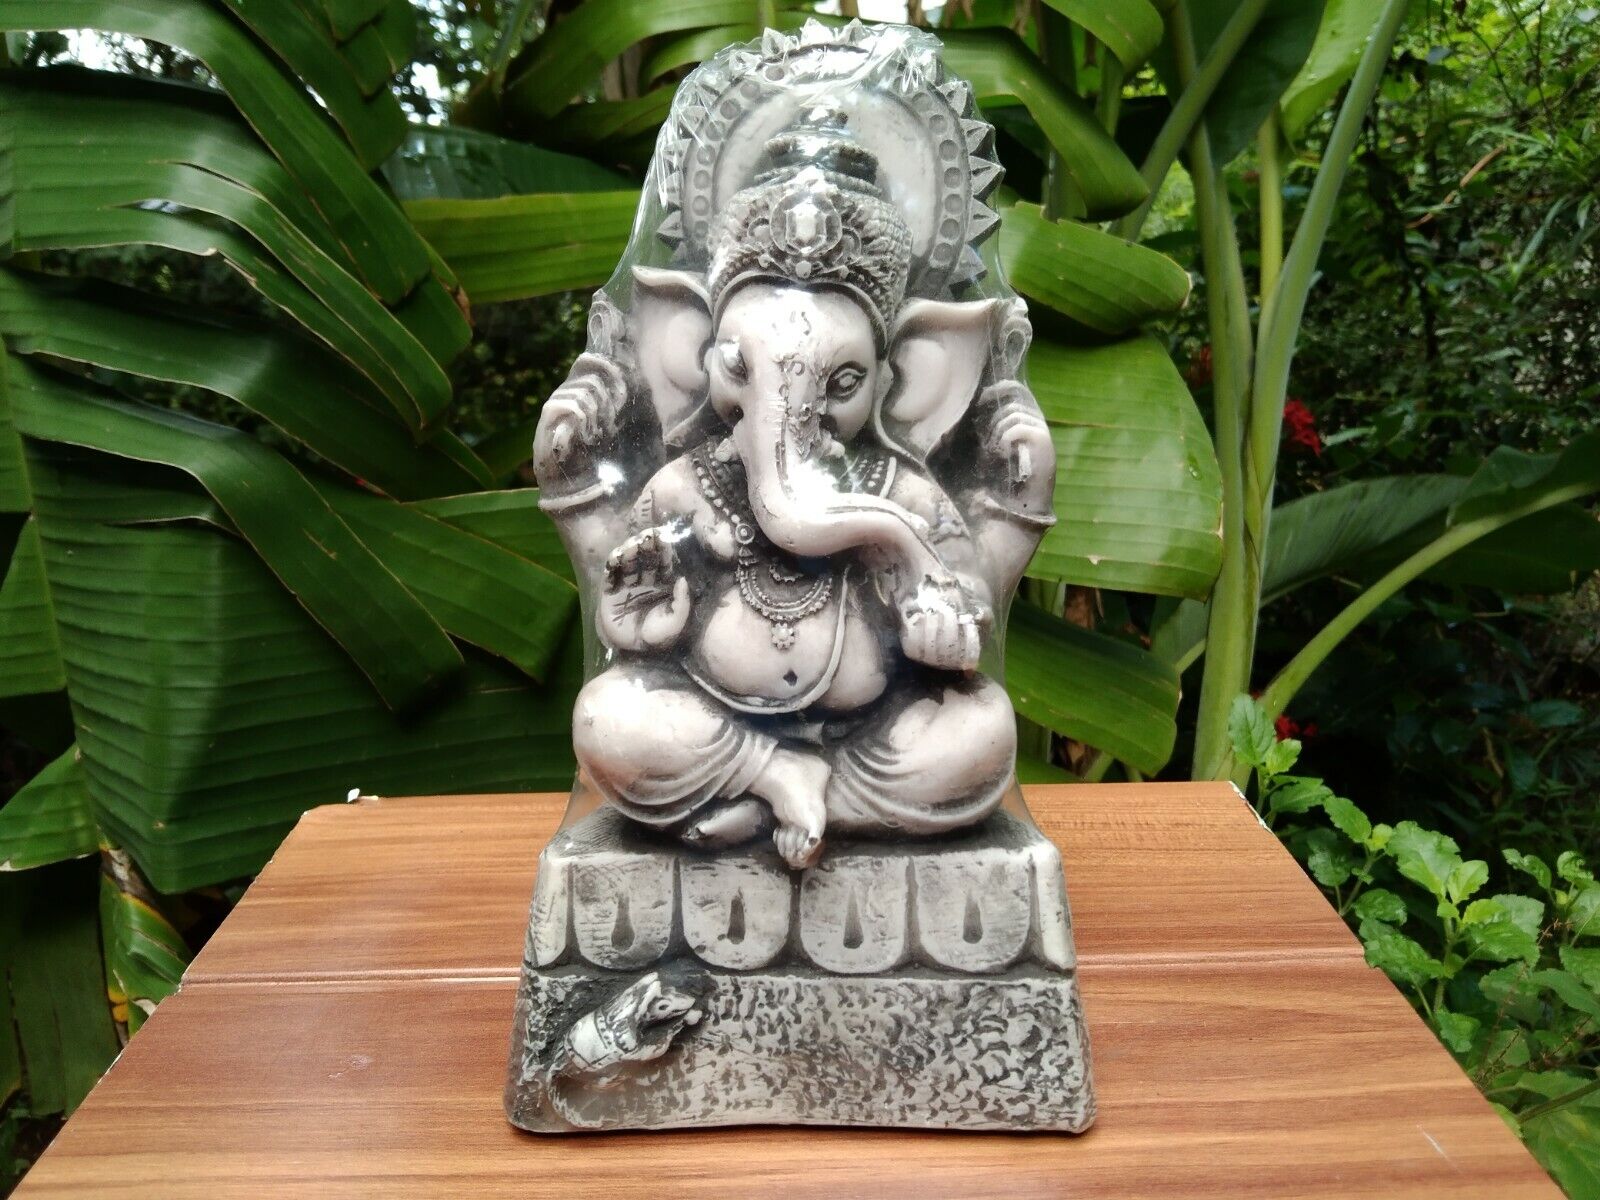 Lord ganesh stone sculpture ganapathi hindu god statue ganesha figurine chrismas